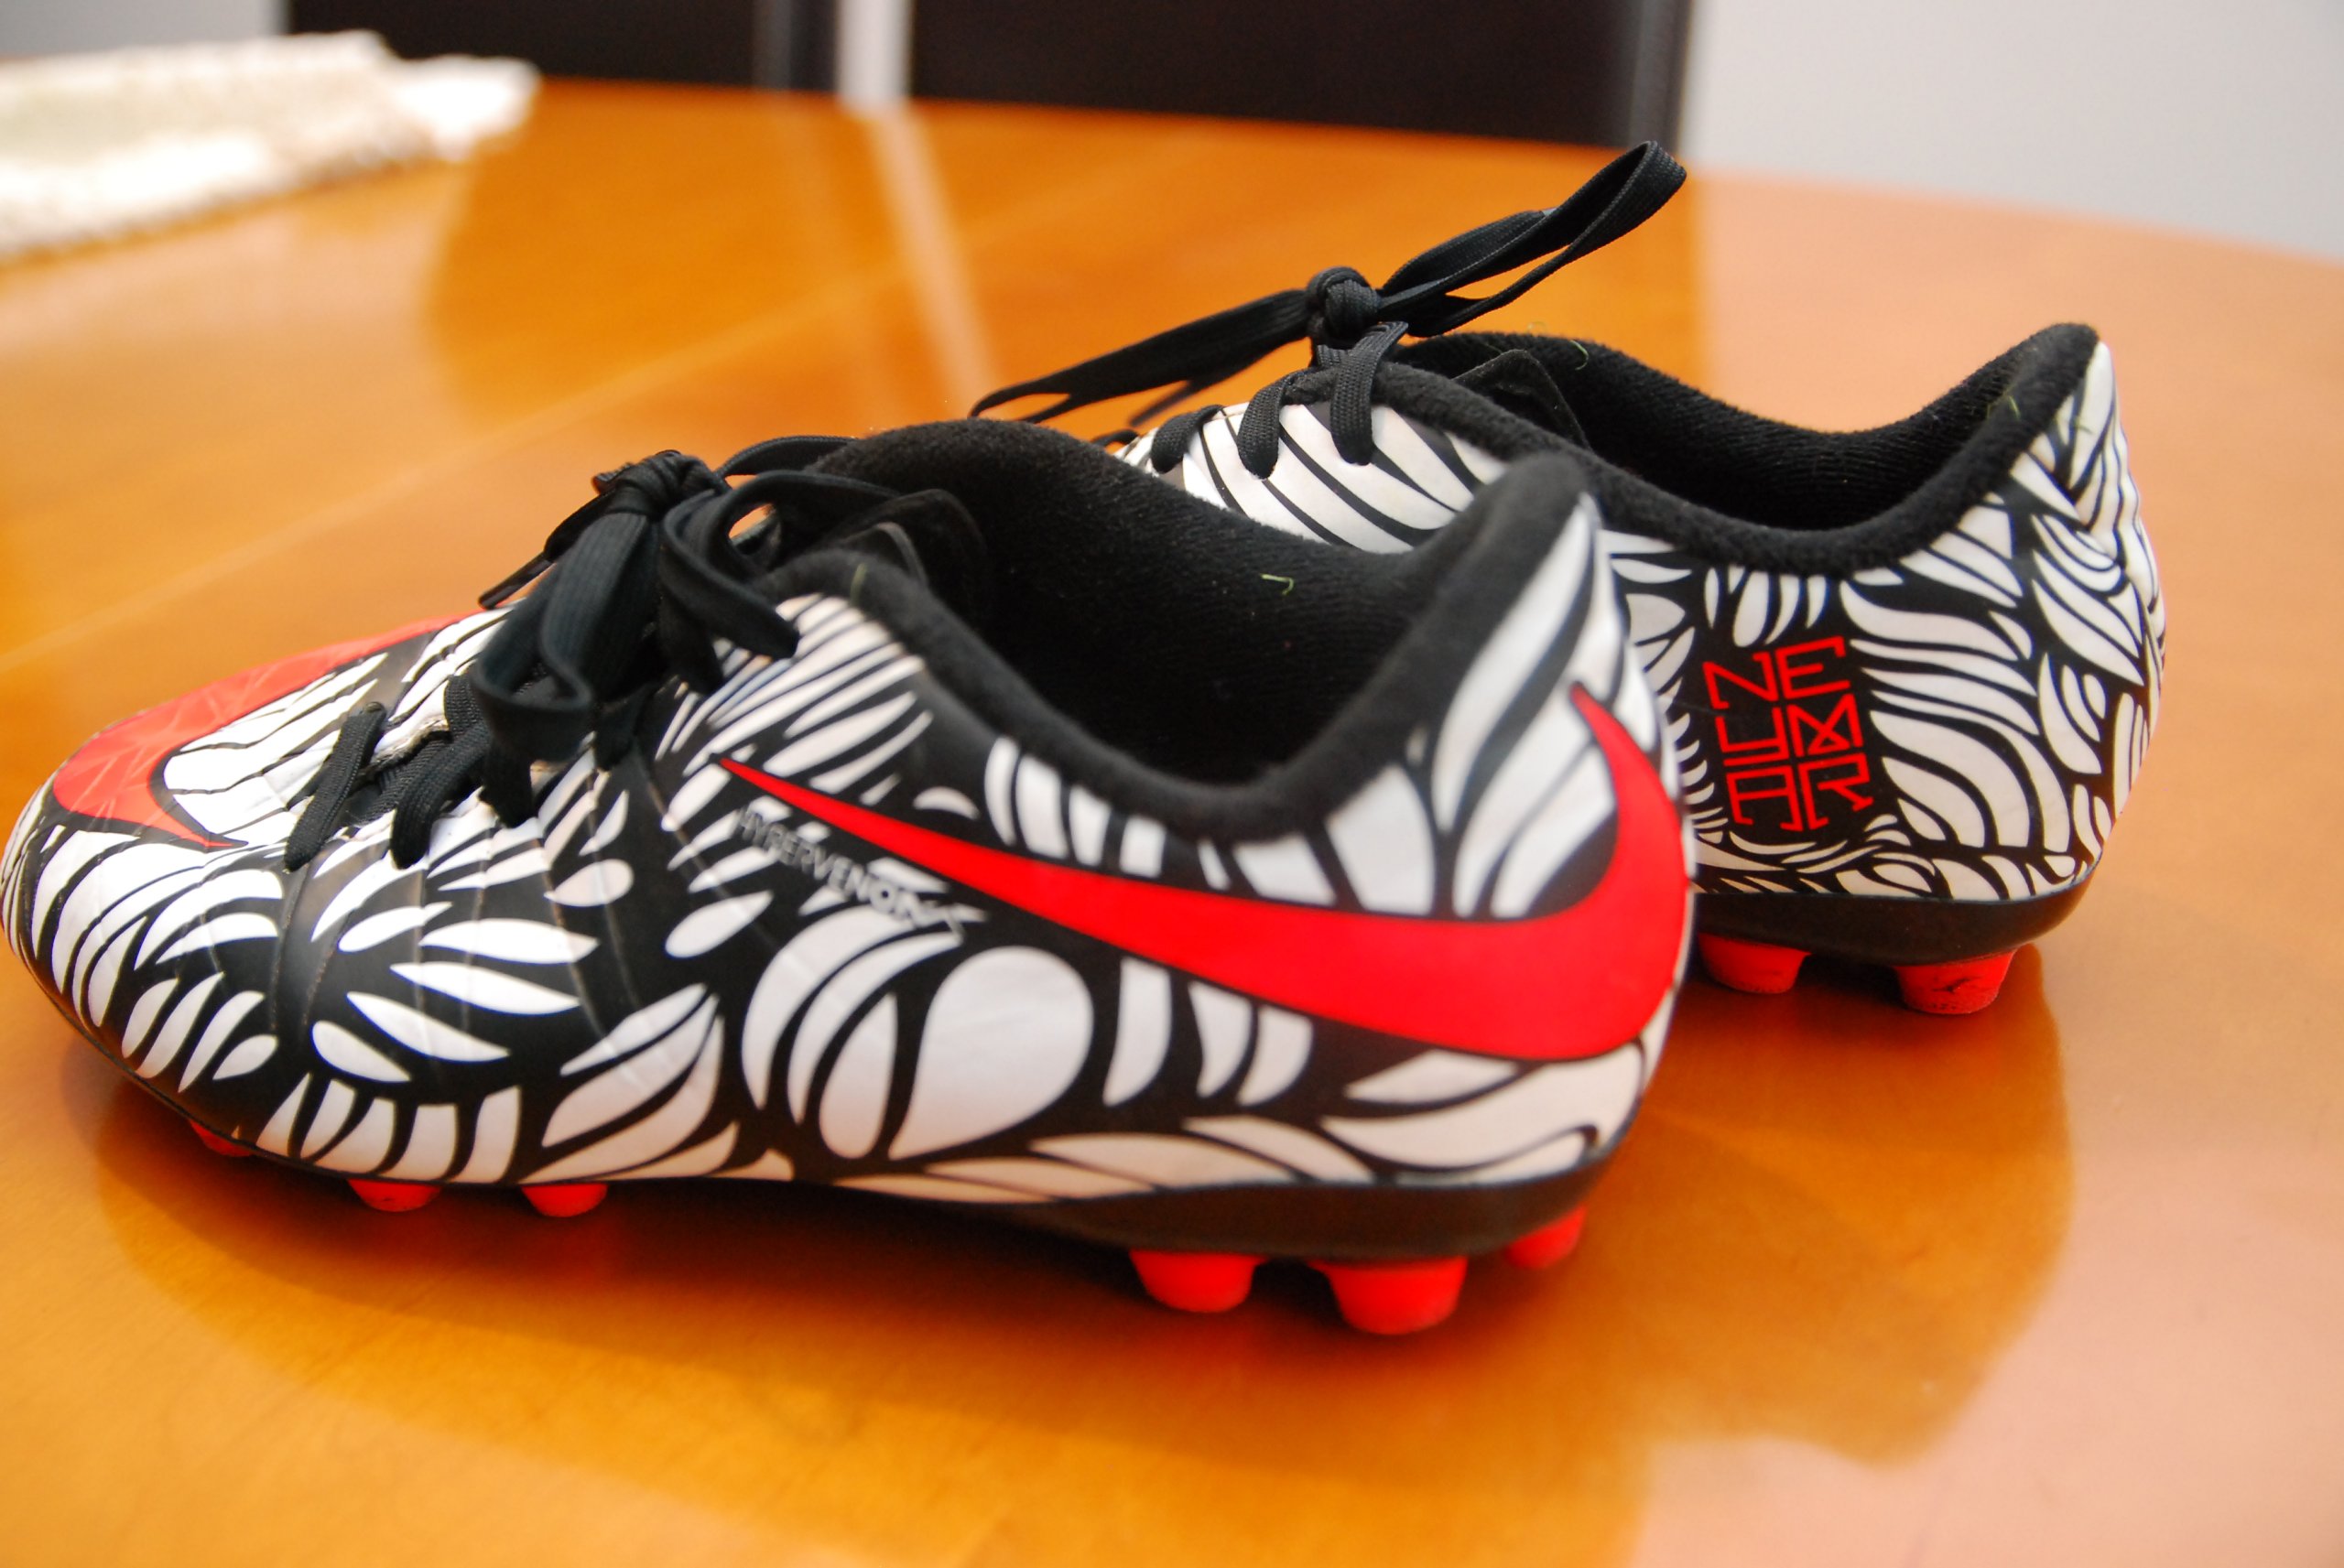 NEW NIke Hypervenom Phantom III FG football soccer shoes